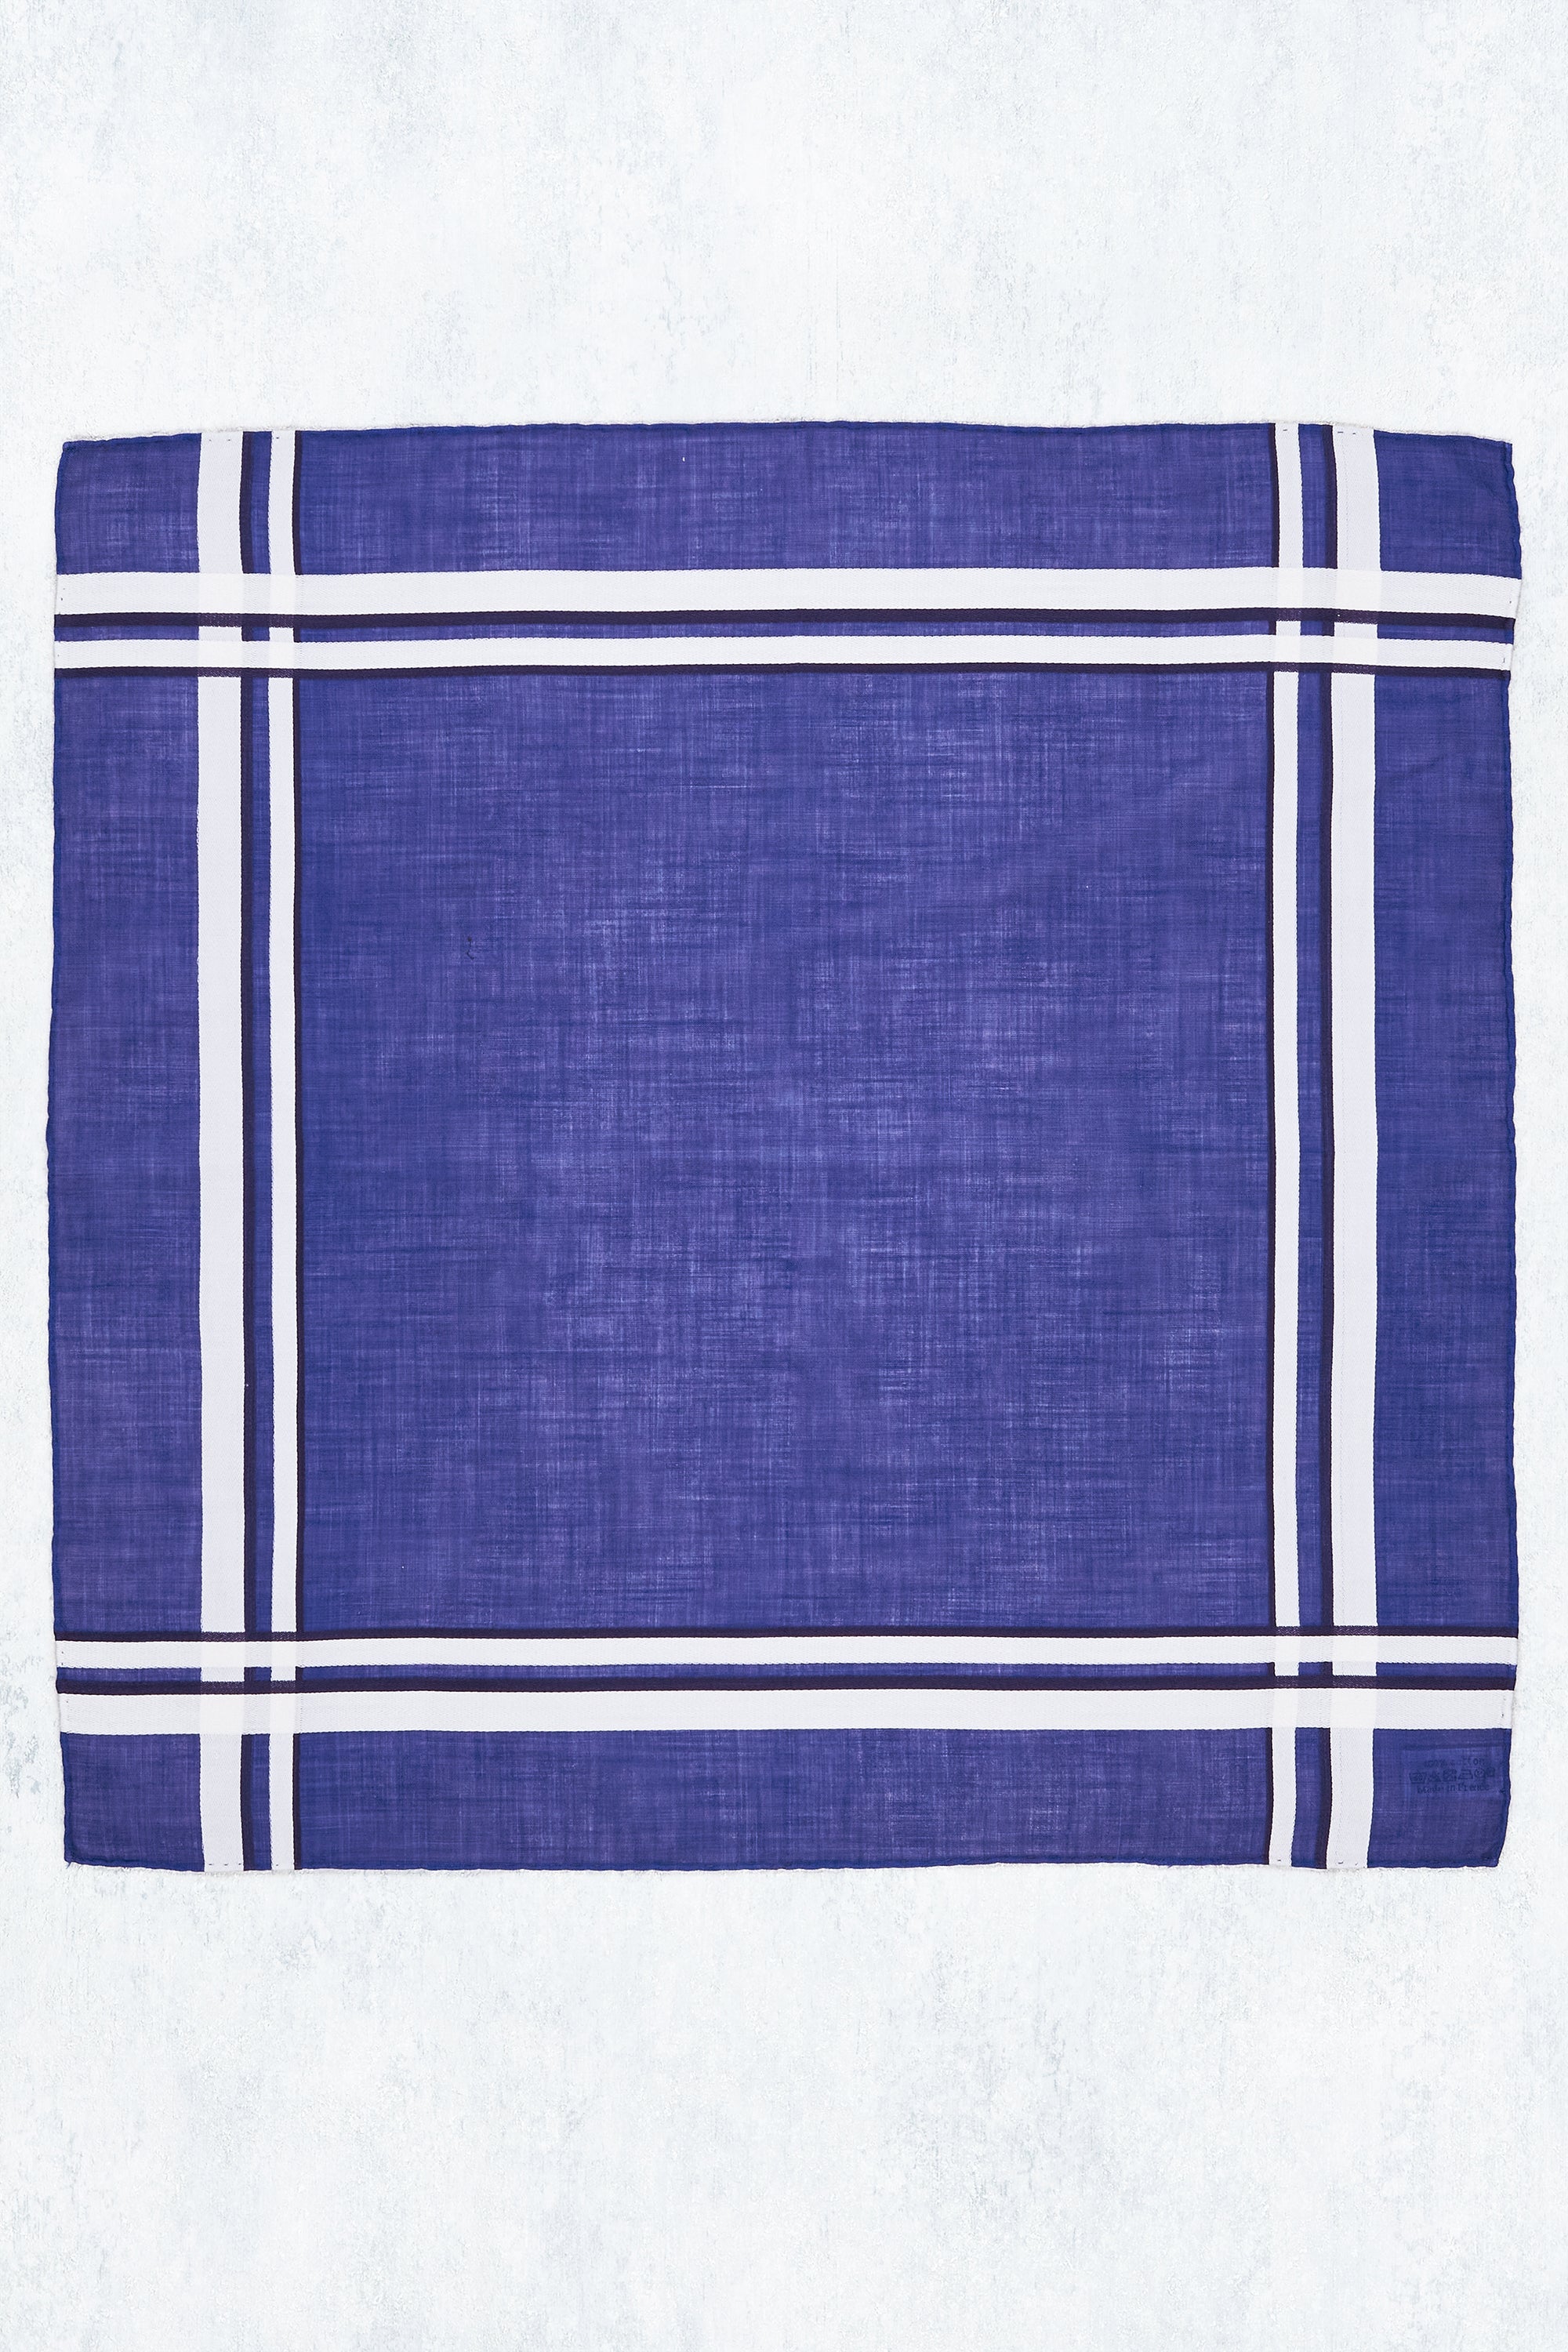 Simonnot Godard Purple-Blue with White Border Cotton Pocket Square